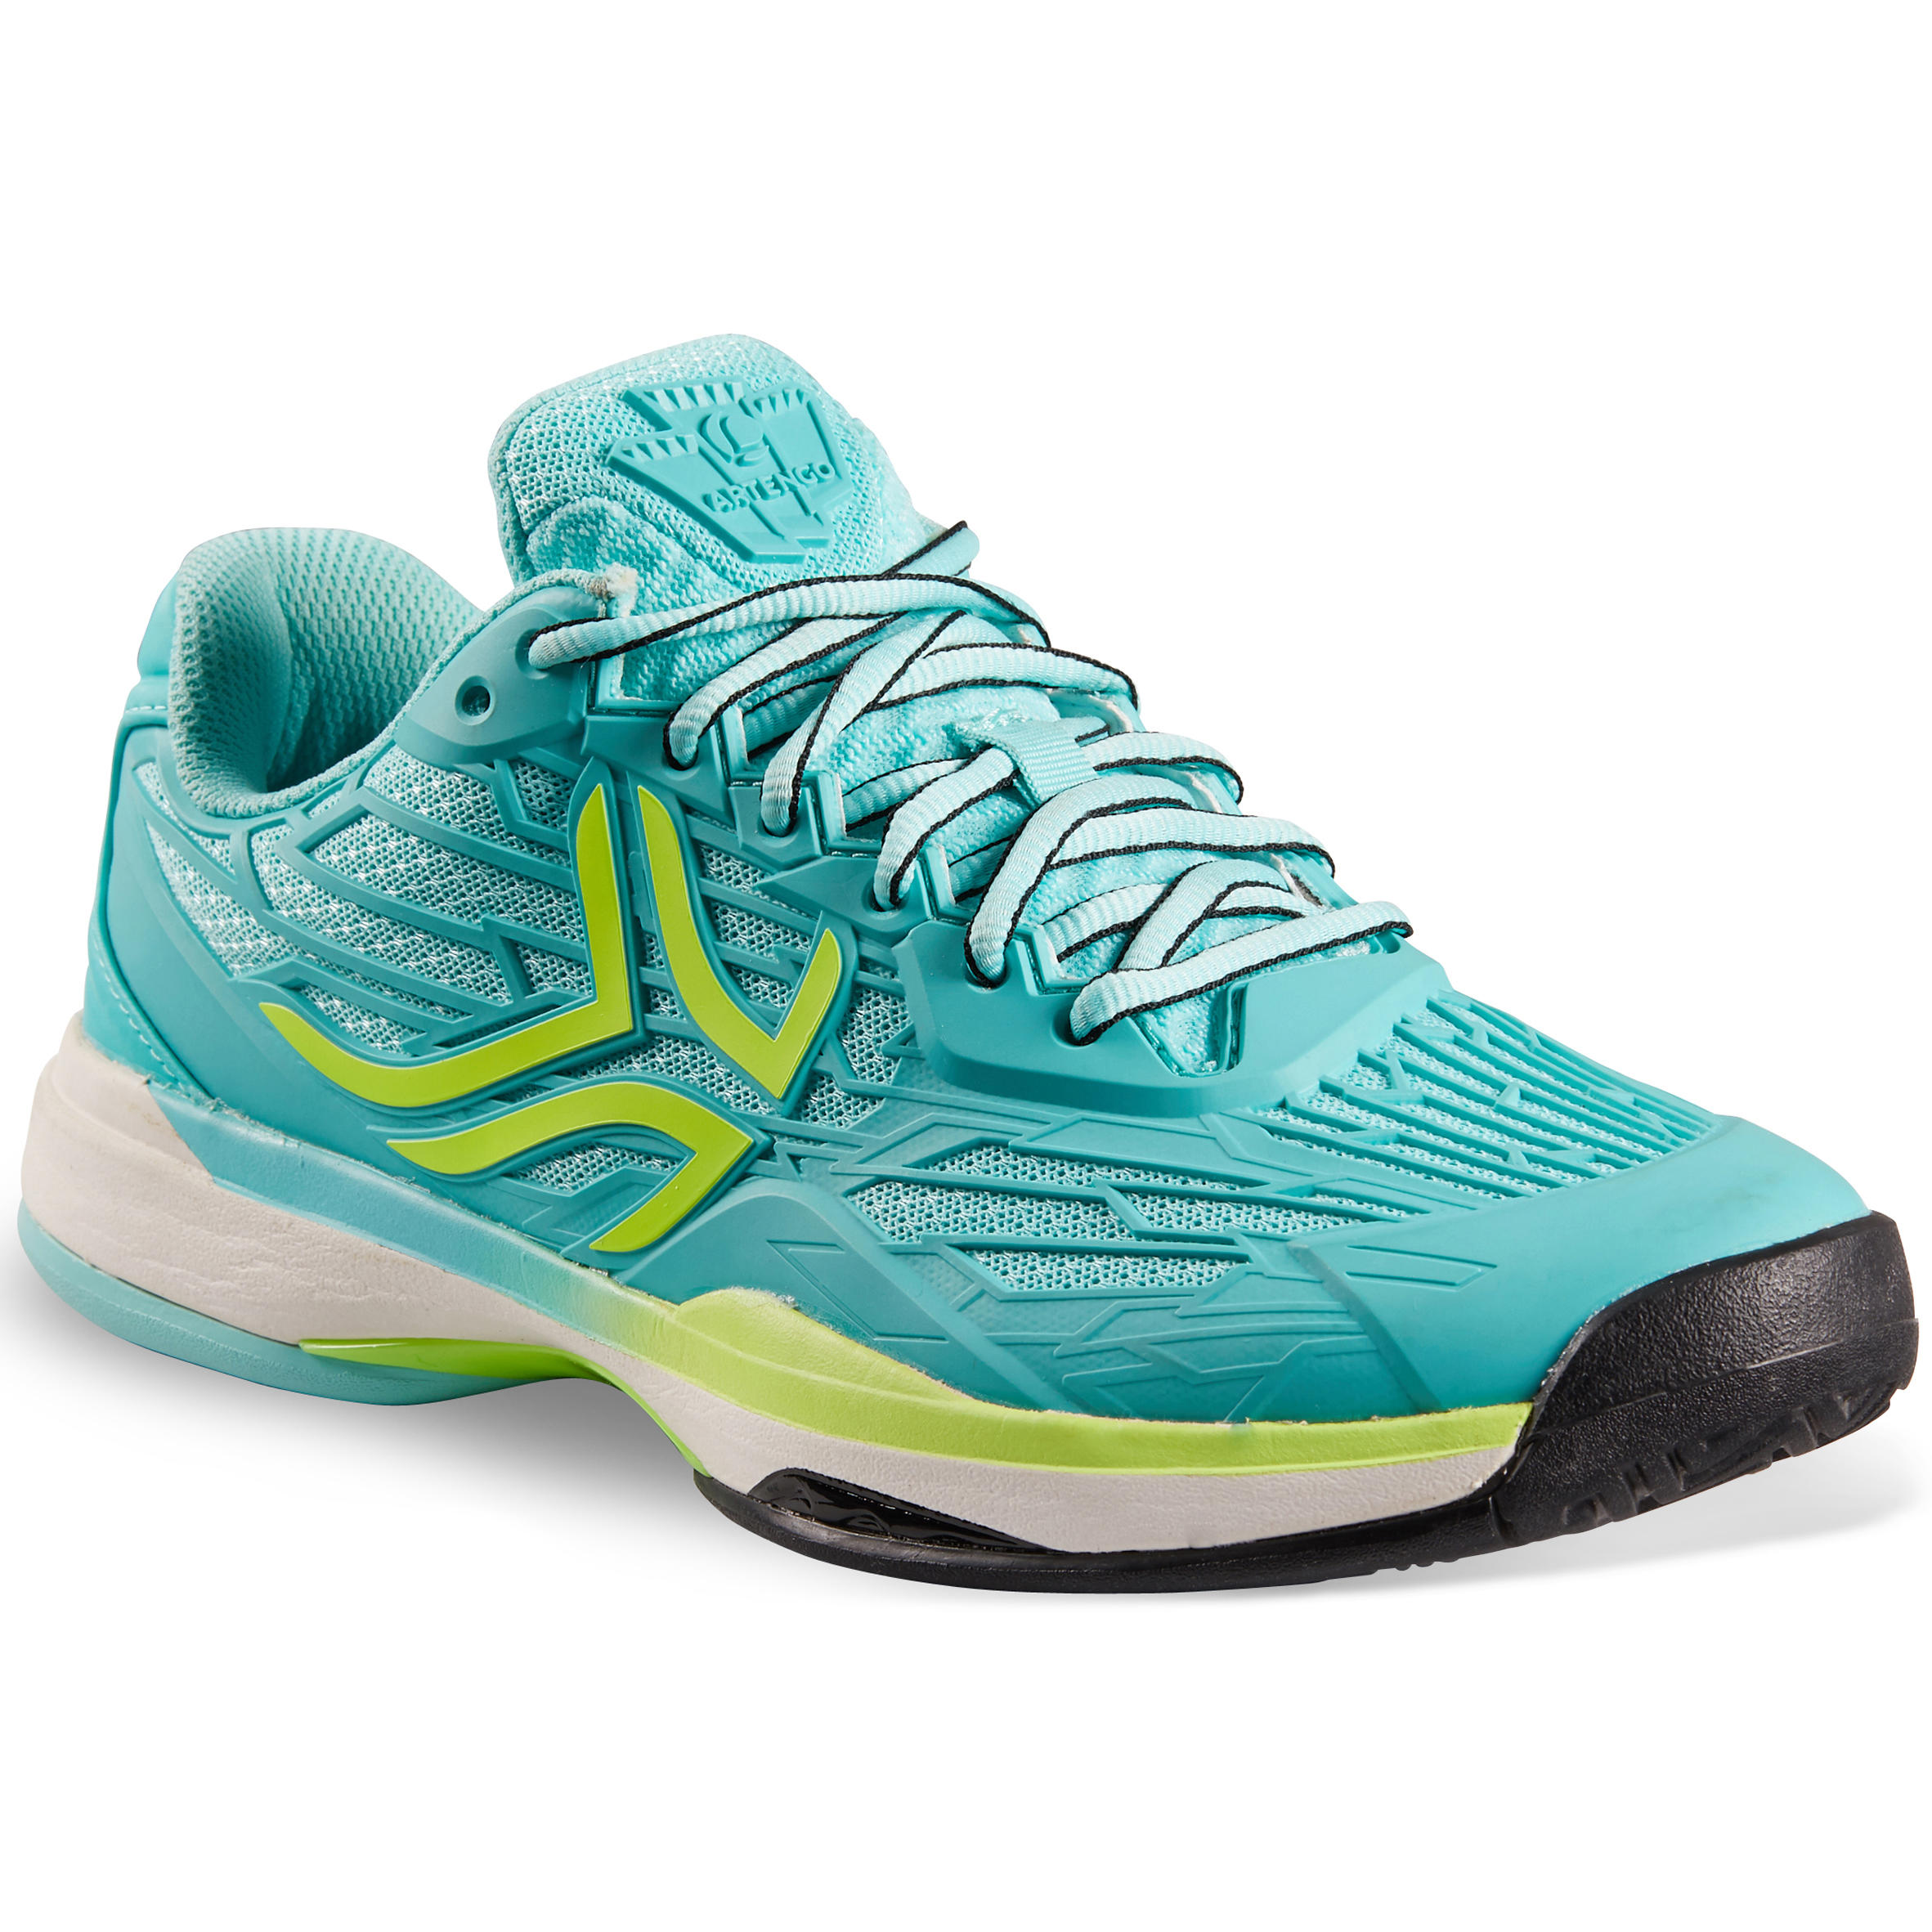 TS990 Women's Tennis Shoes - Turquoise 1/9